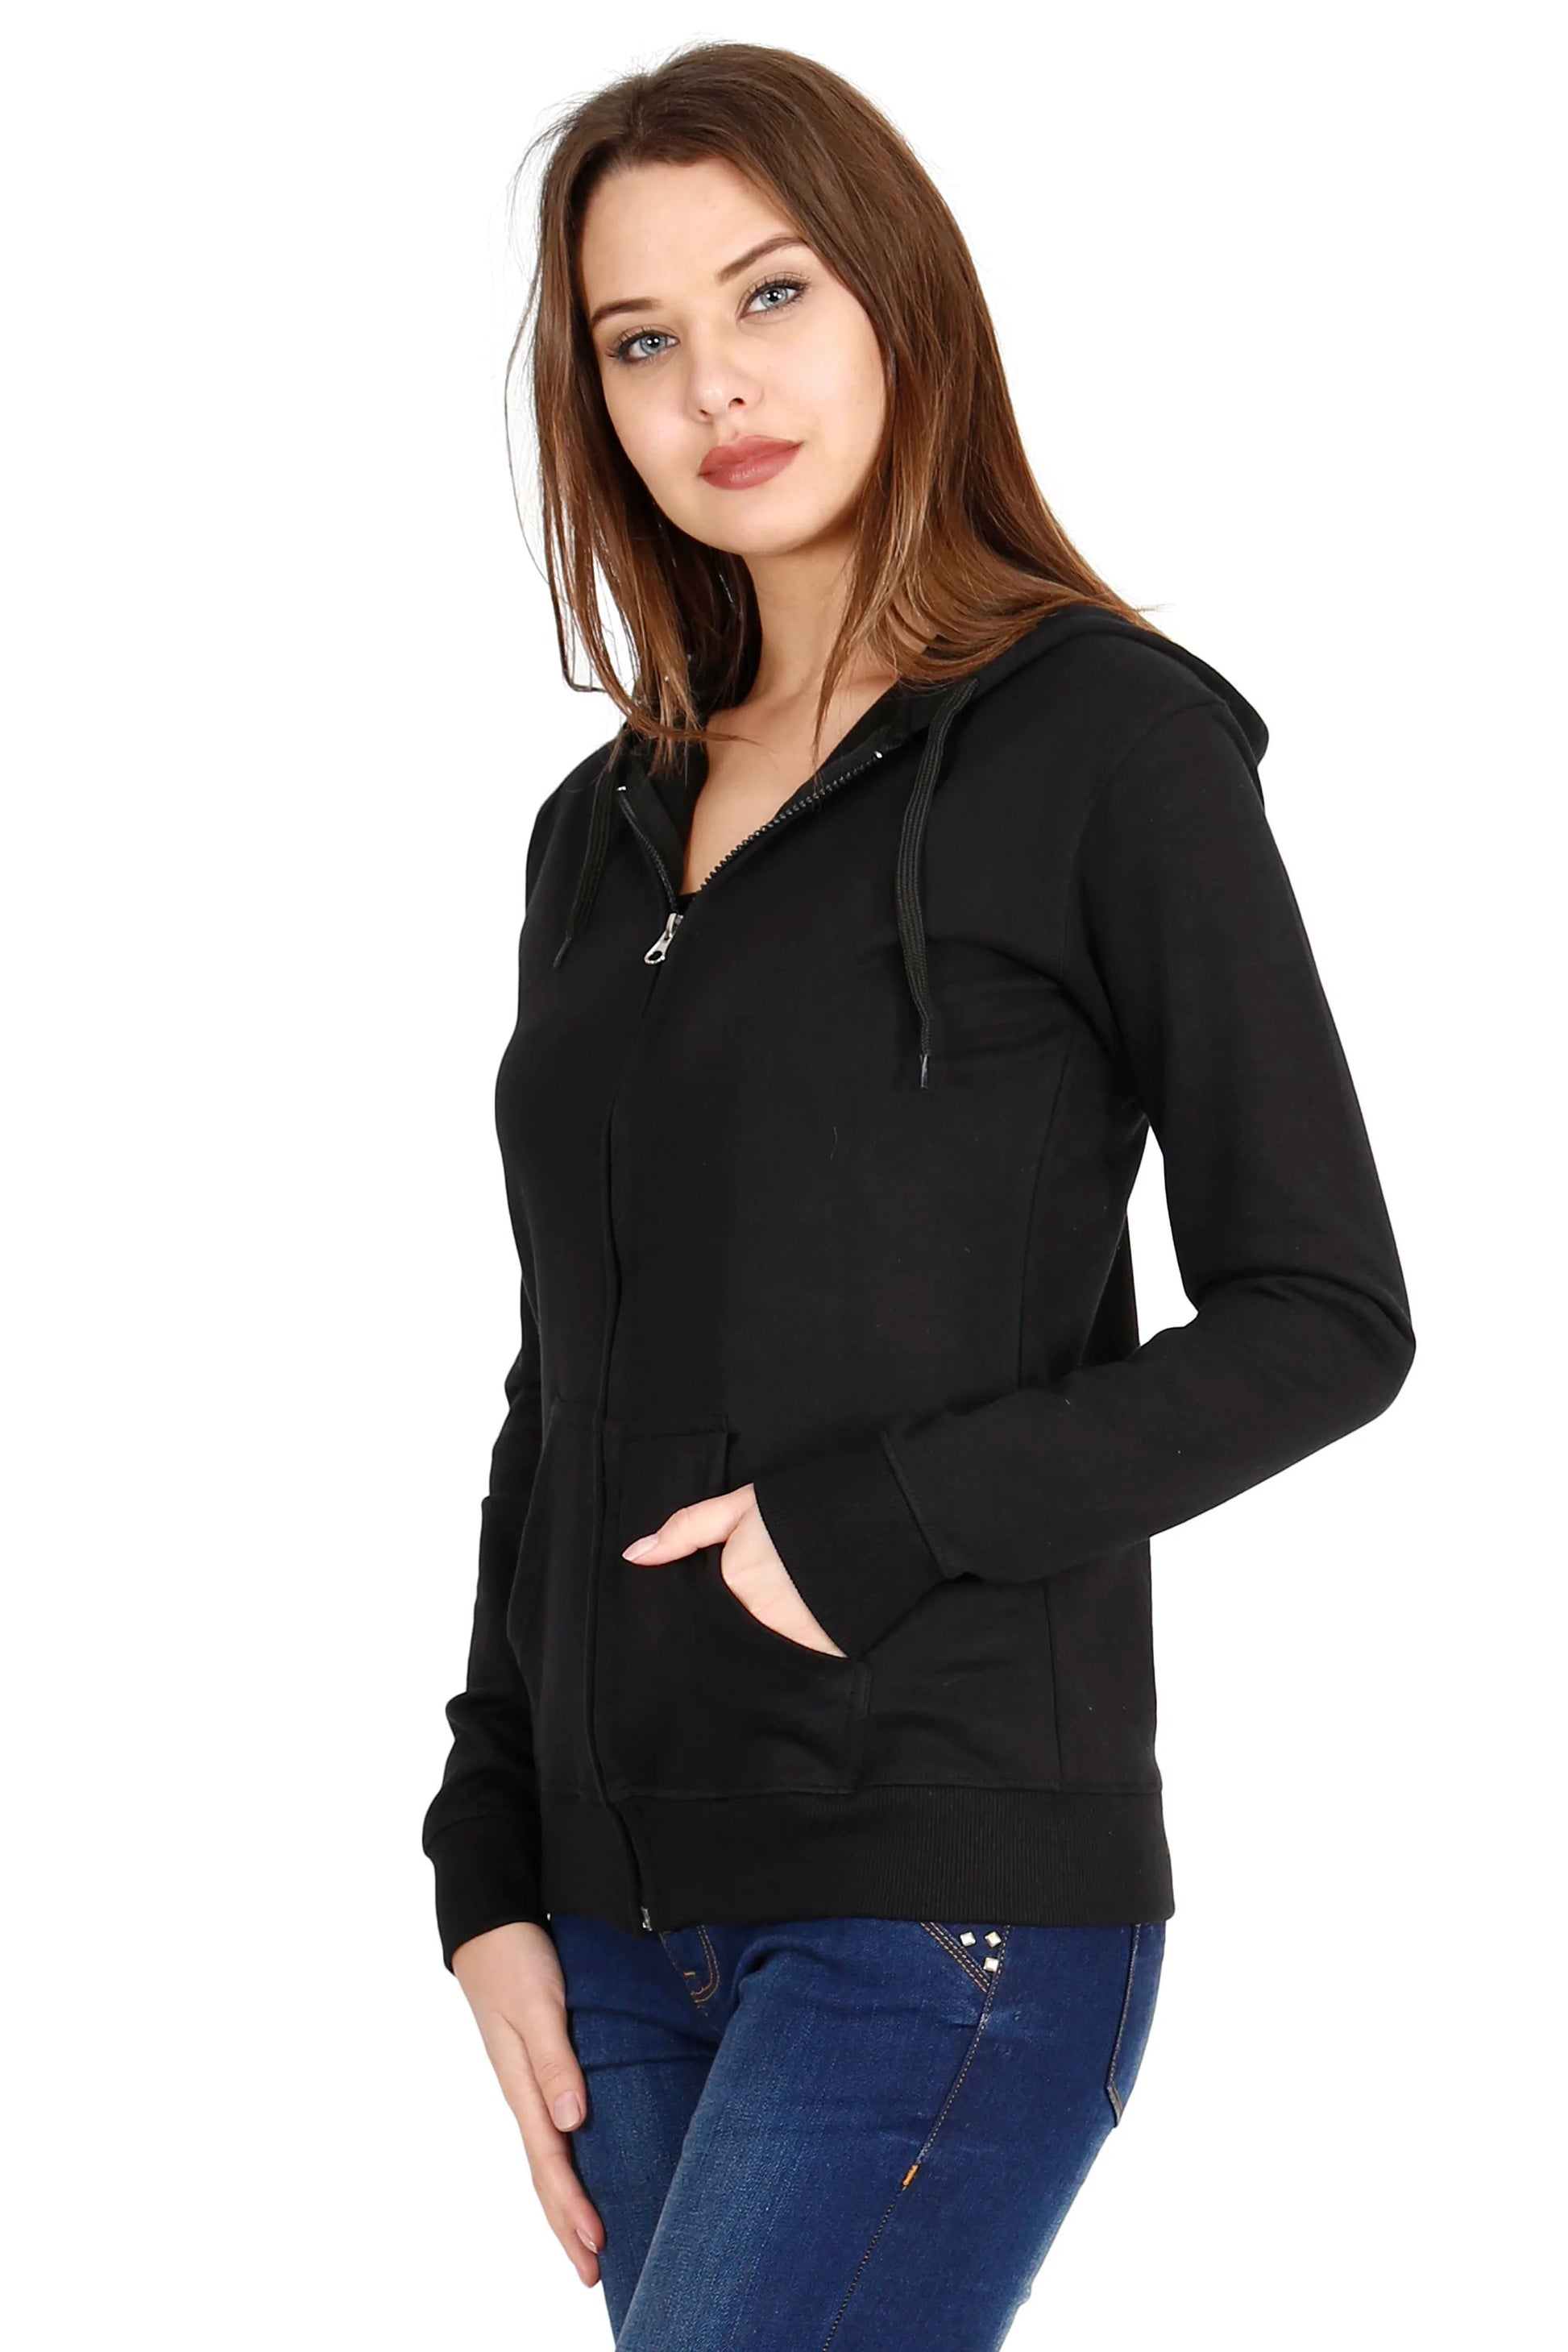 Fleximaa Women's Cotton Plain Full Sleeve Hoodies/Sweatshirt - fleximaa-so